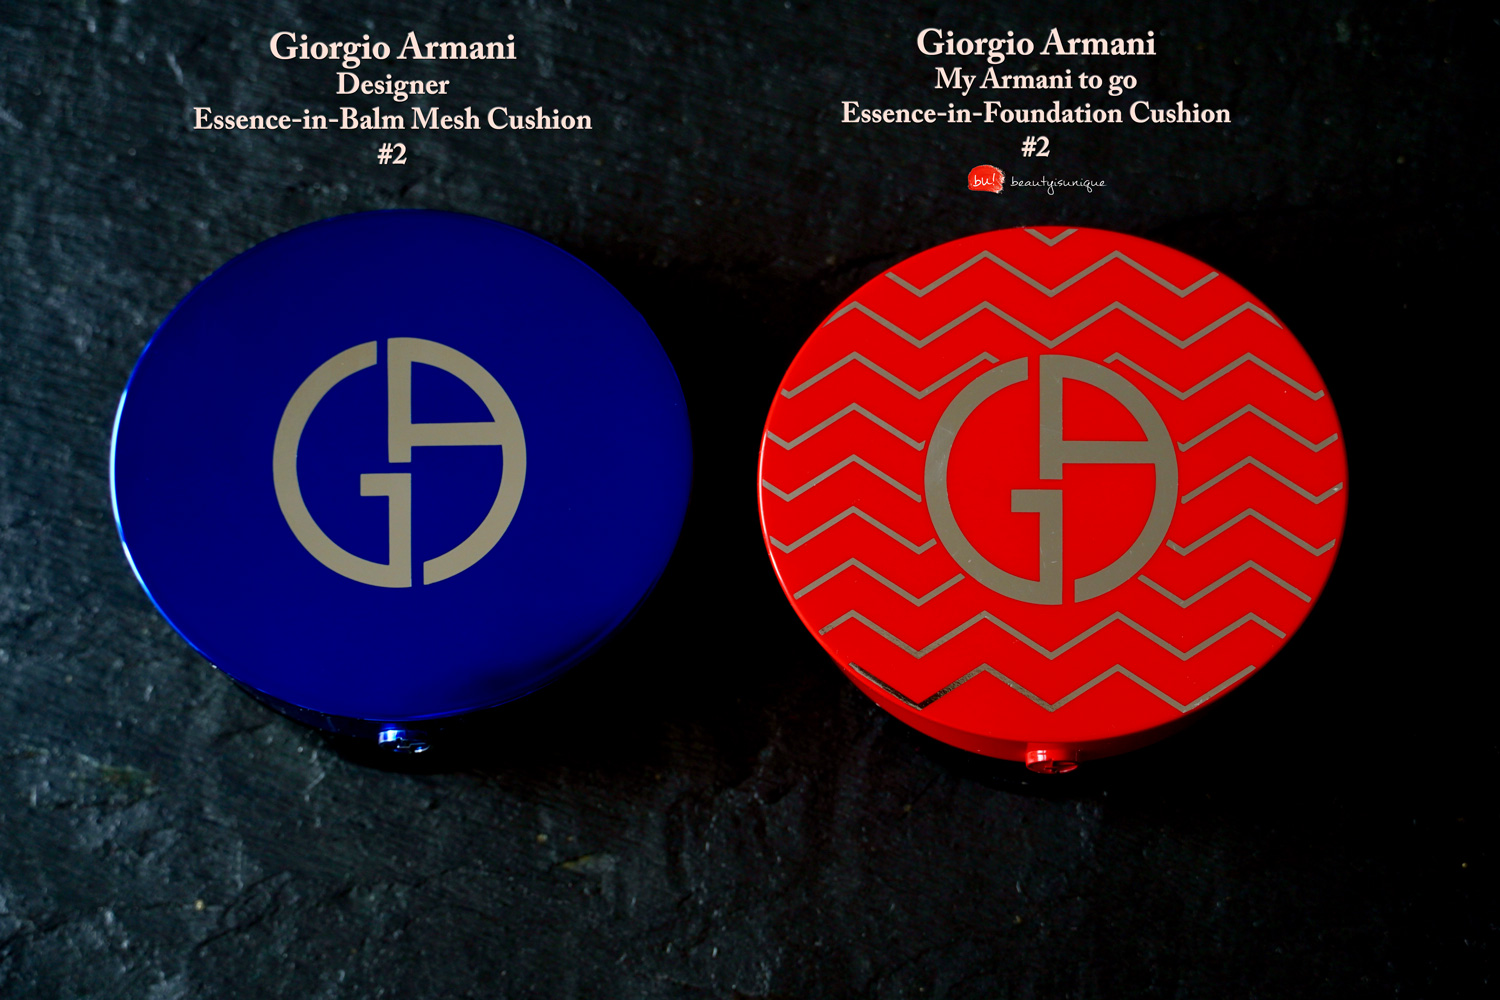 Giorgio-armani-designer-essence-in-balm-mesh-cushion